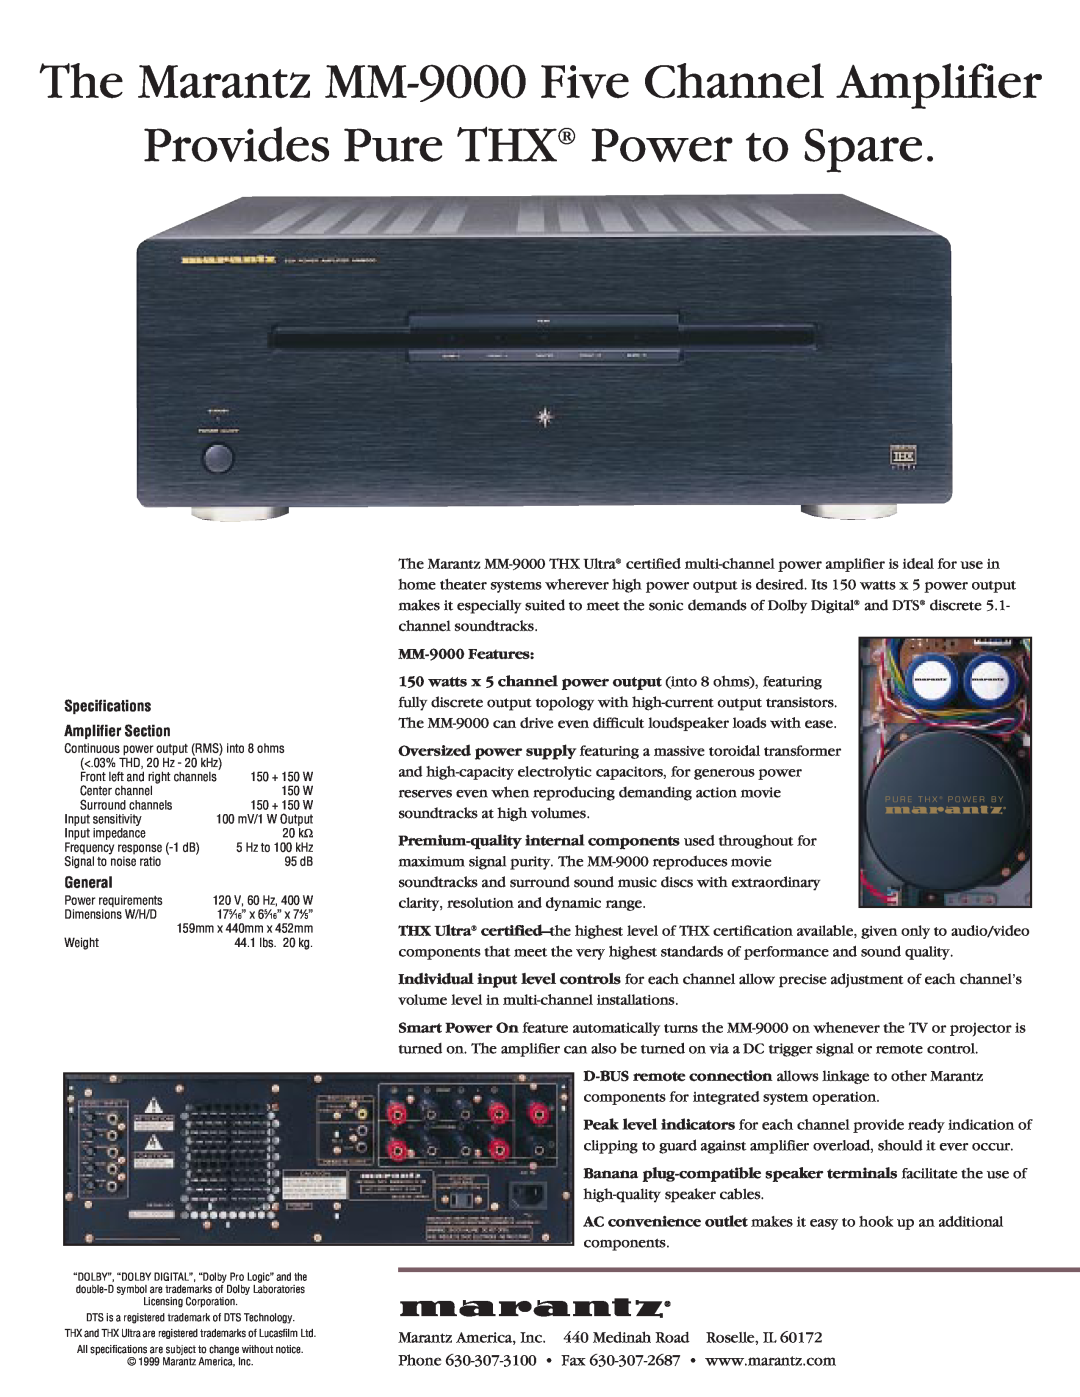 Marantz specifications The Marantz MM-9000Five Channel Amplifier, Provides Pure THX Power to Spare 